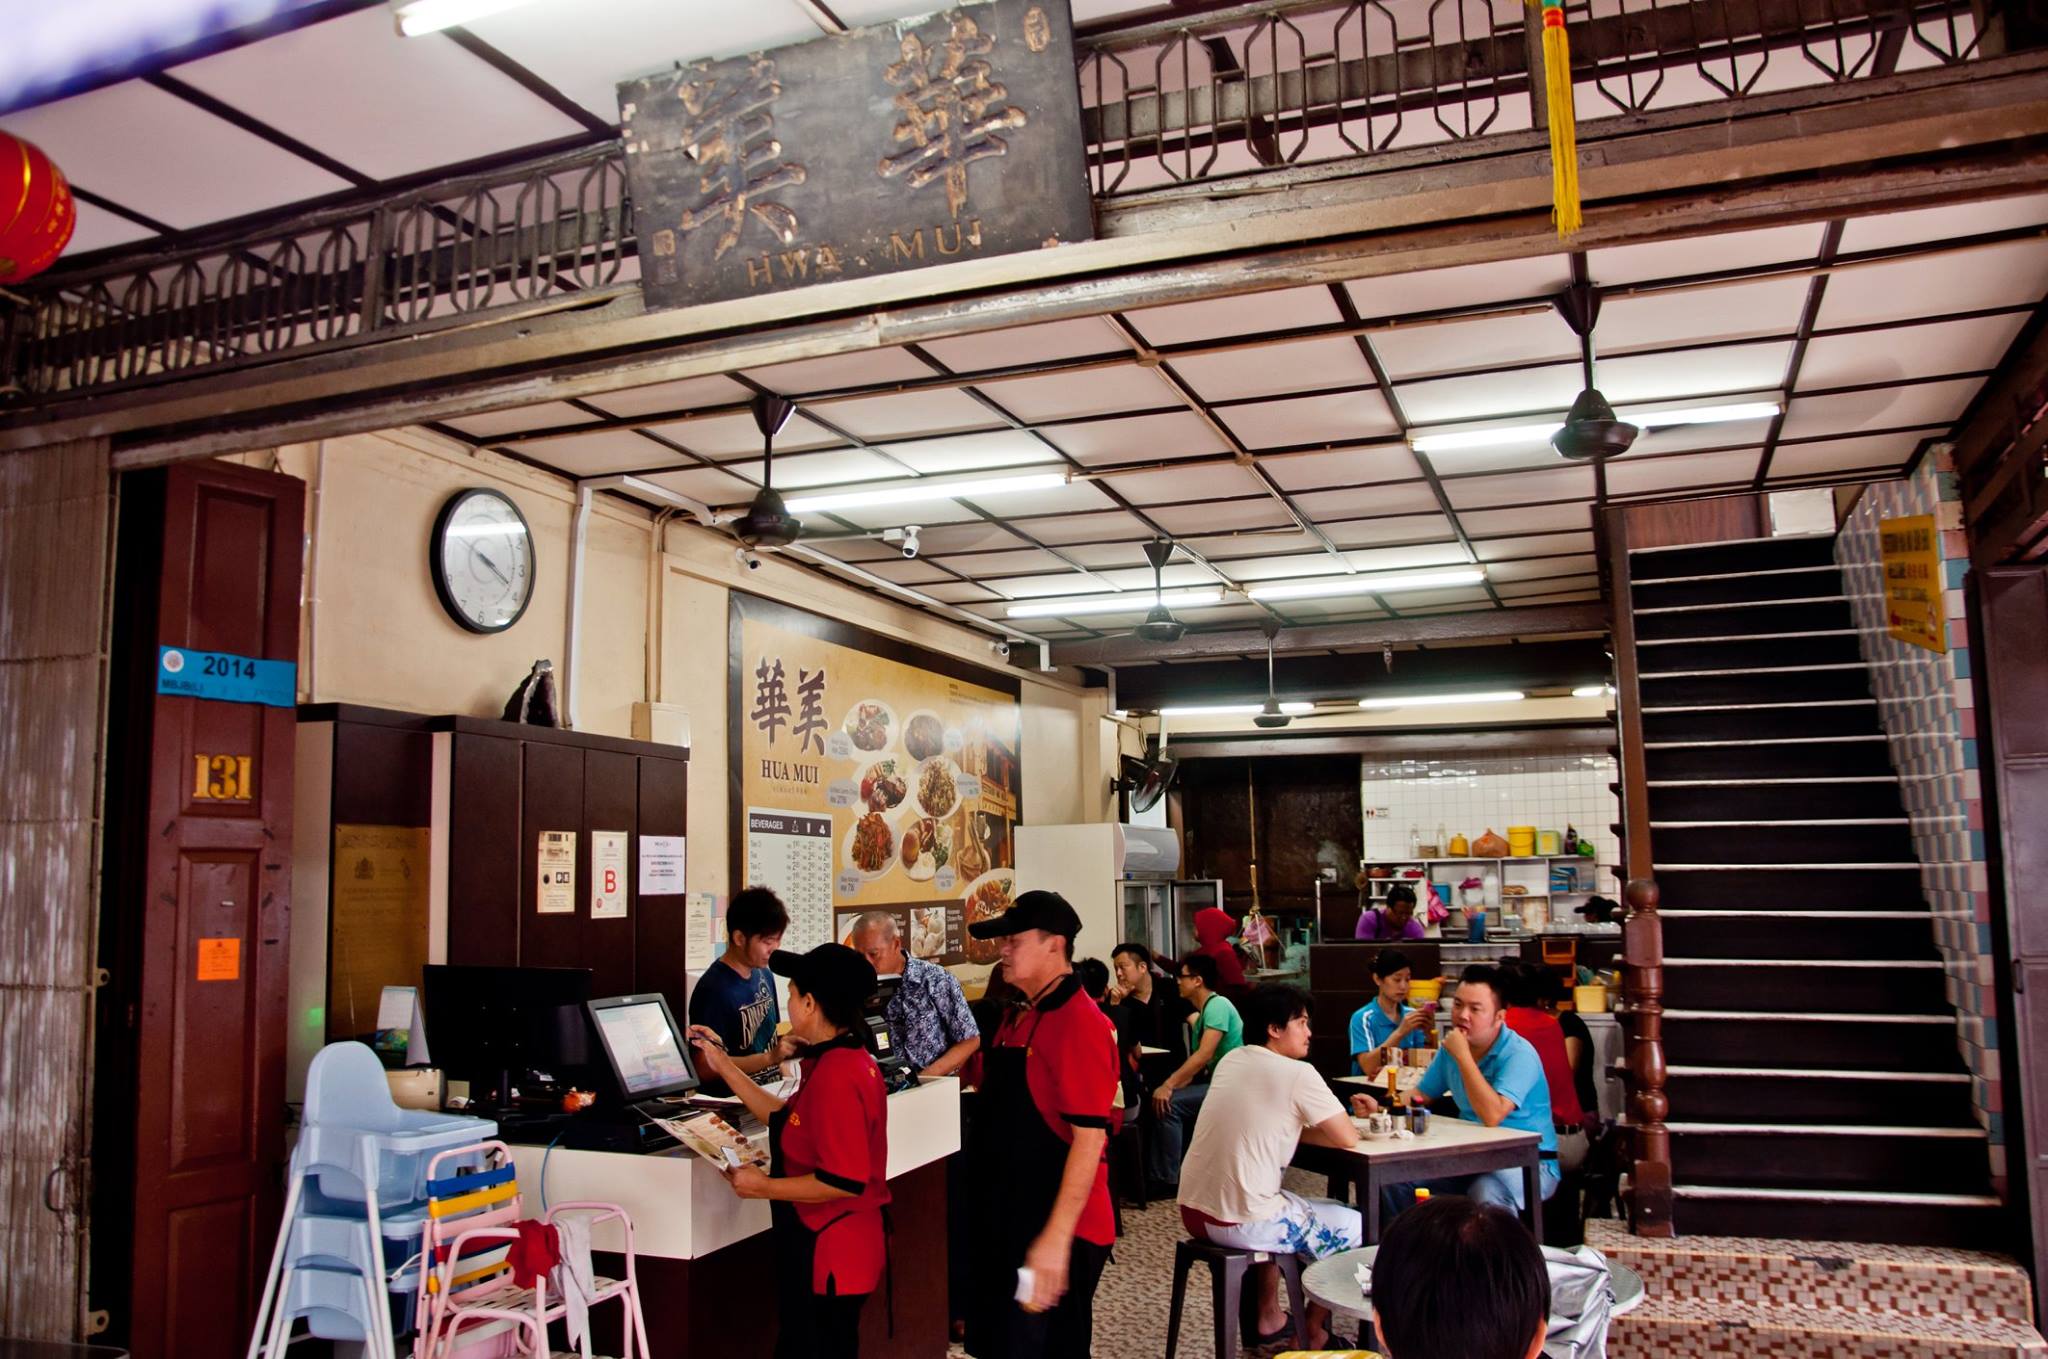 Restoran Hua Mui Johor Bahru Malaysia - AspirantSG